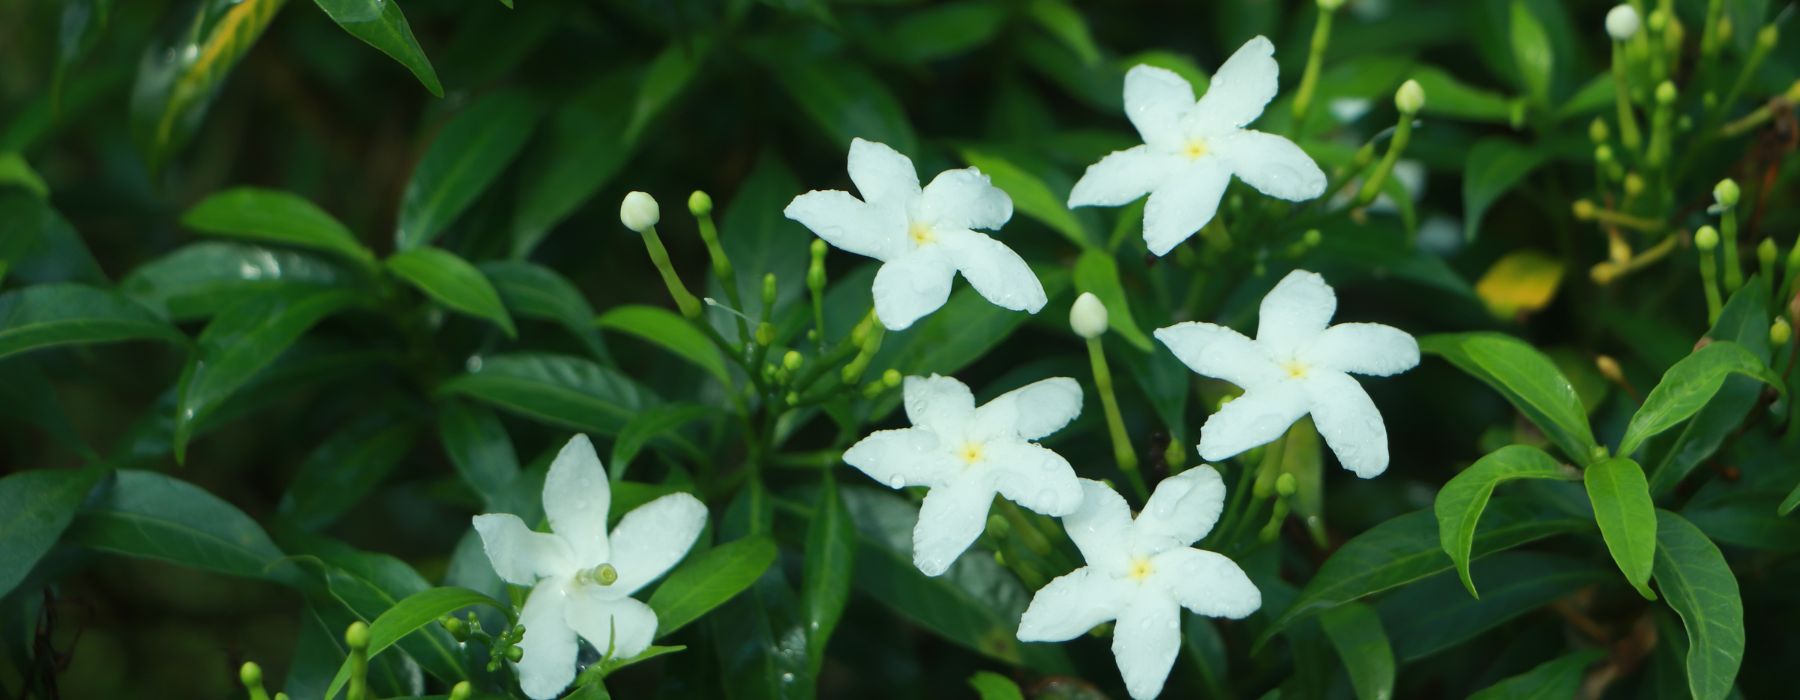 photo of white Jasmine flowers growing on plant